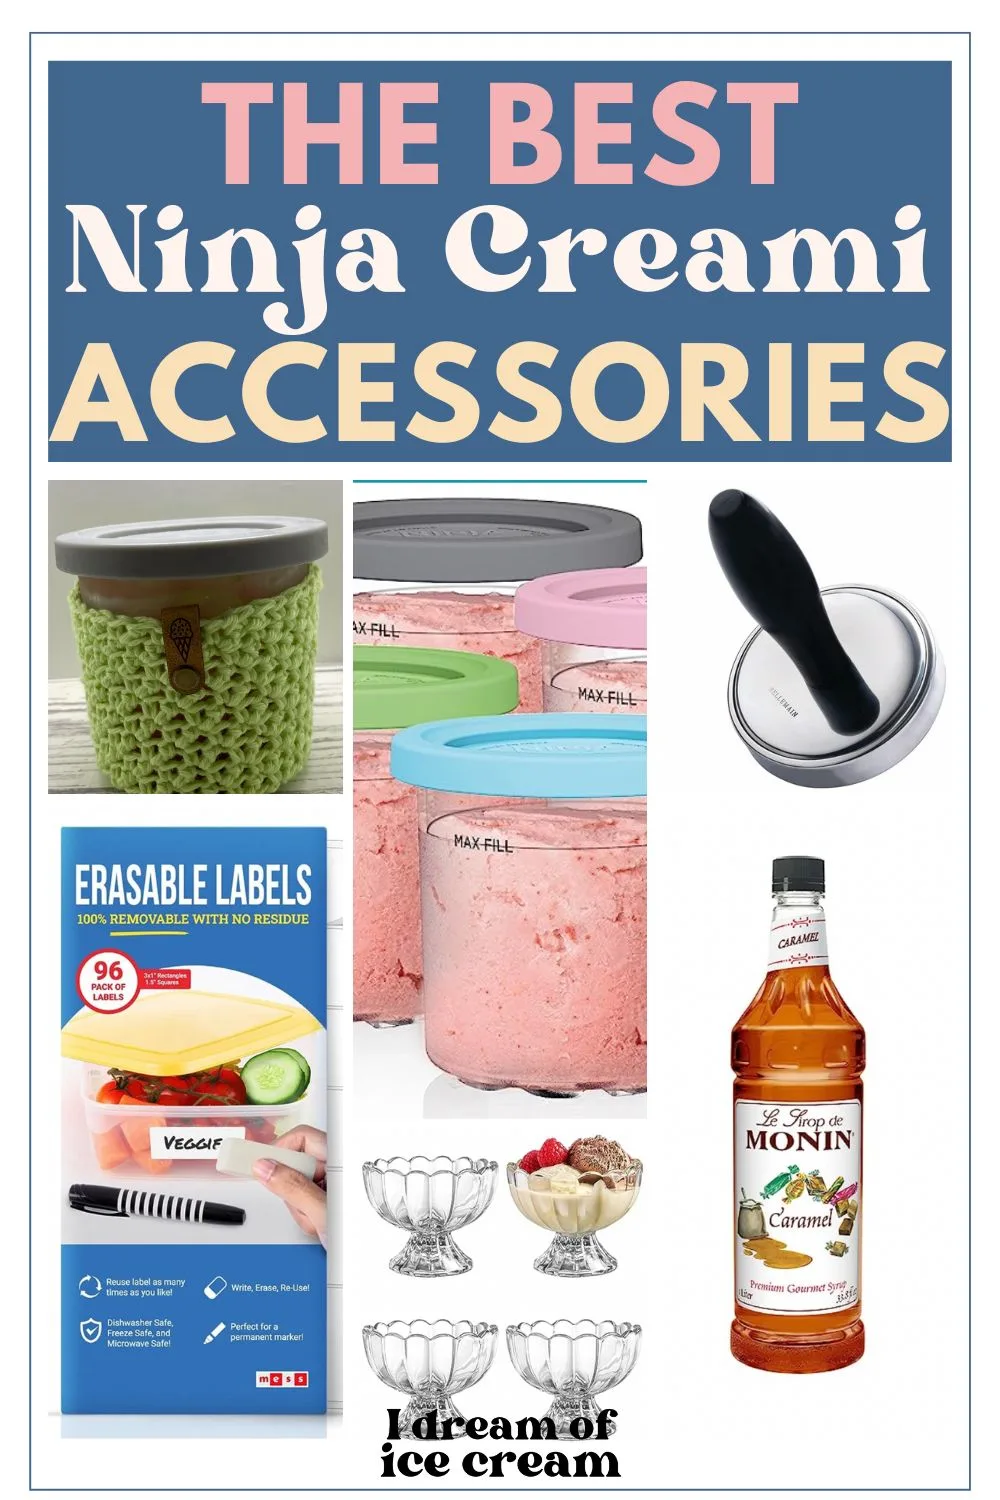 Best Ninja Creami accessories to enhance your ice cream experience